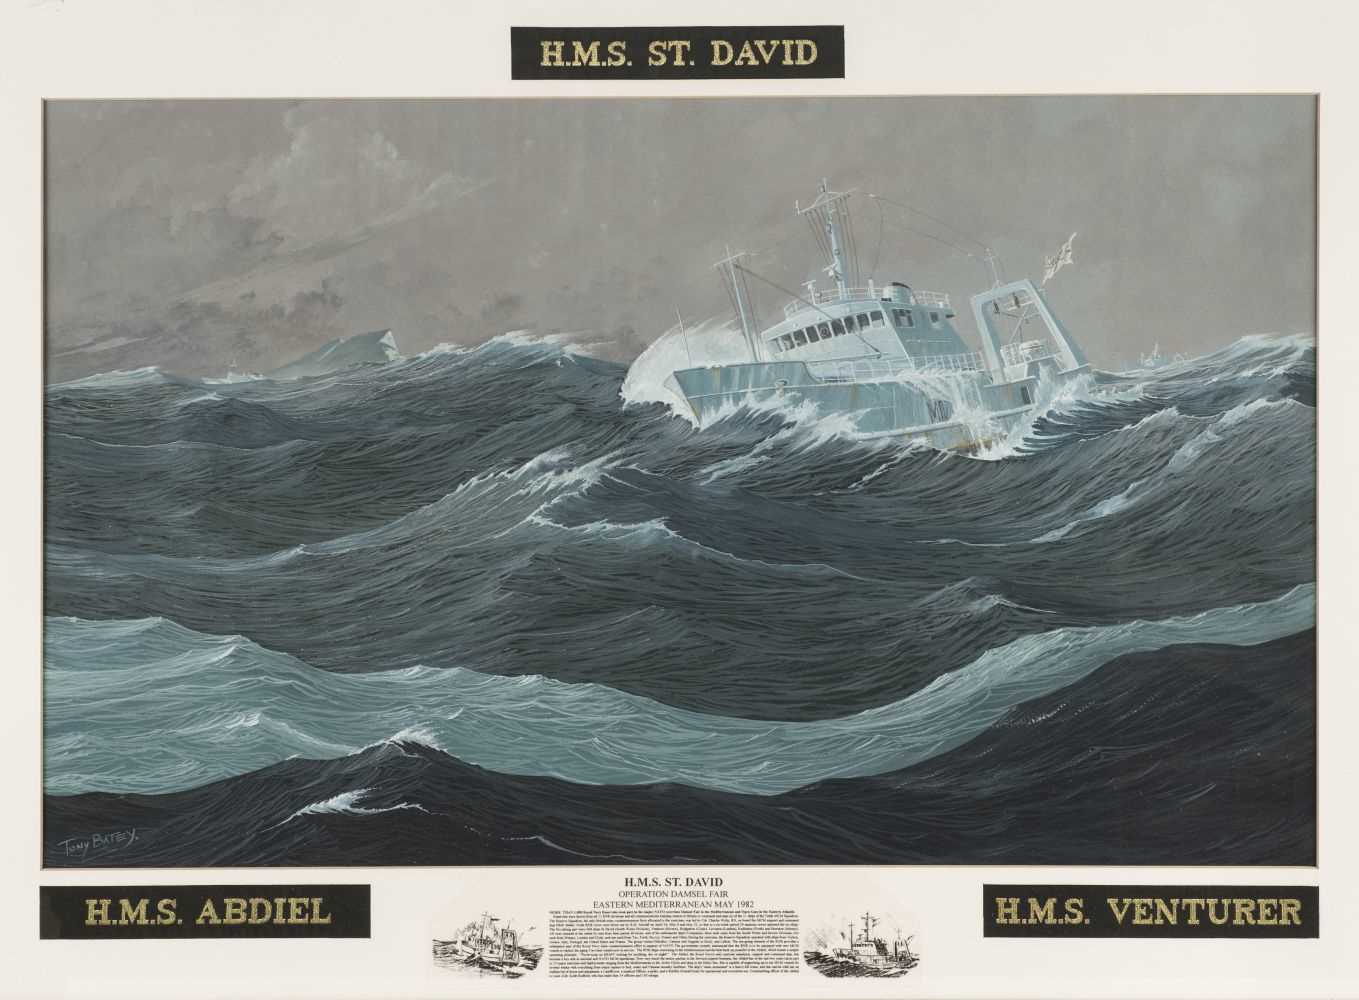 Lot 367 - Batey (Tony). HMS St. David, watercolour and gouache